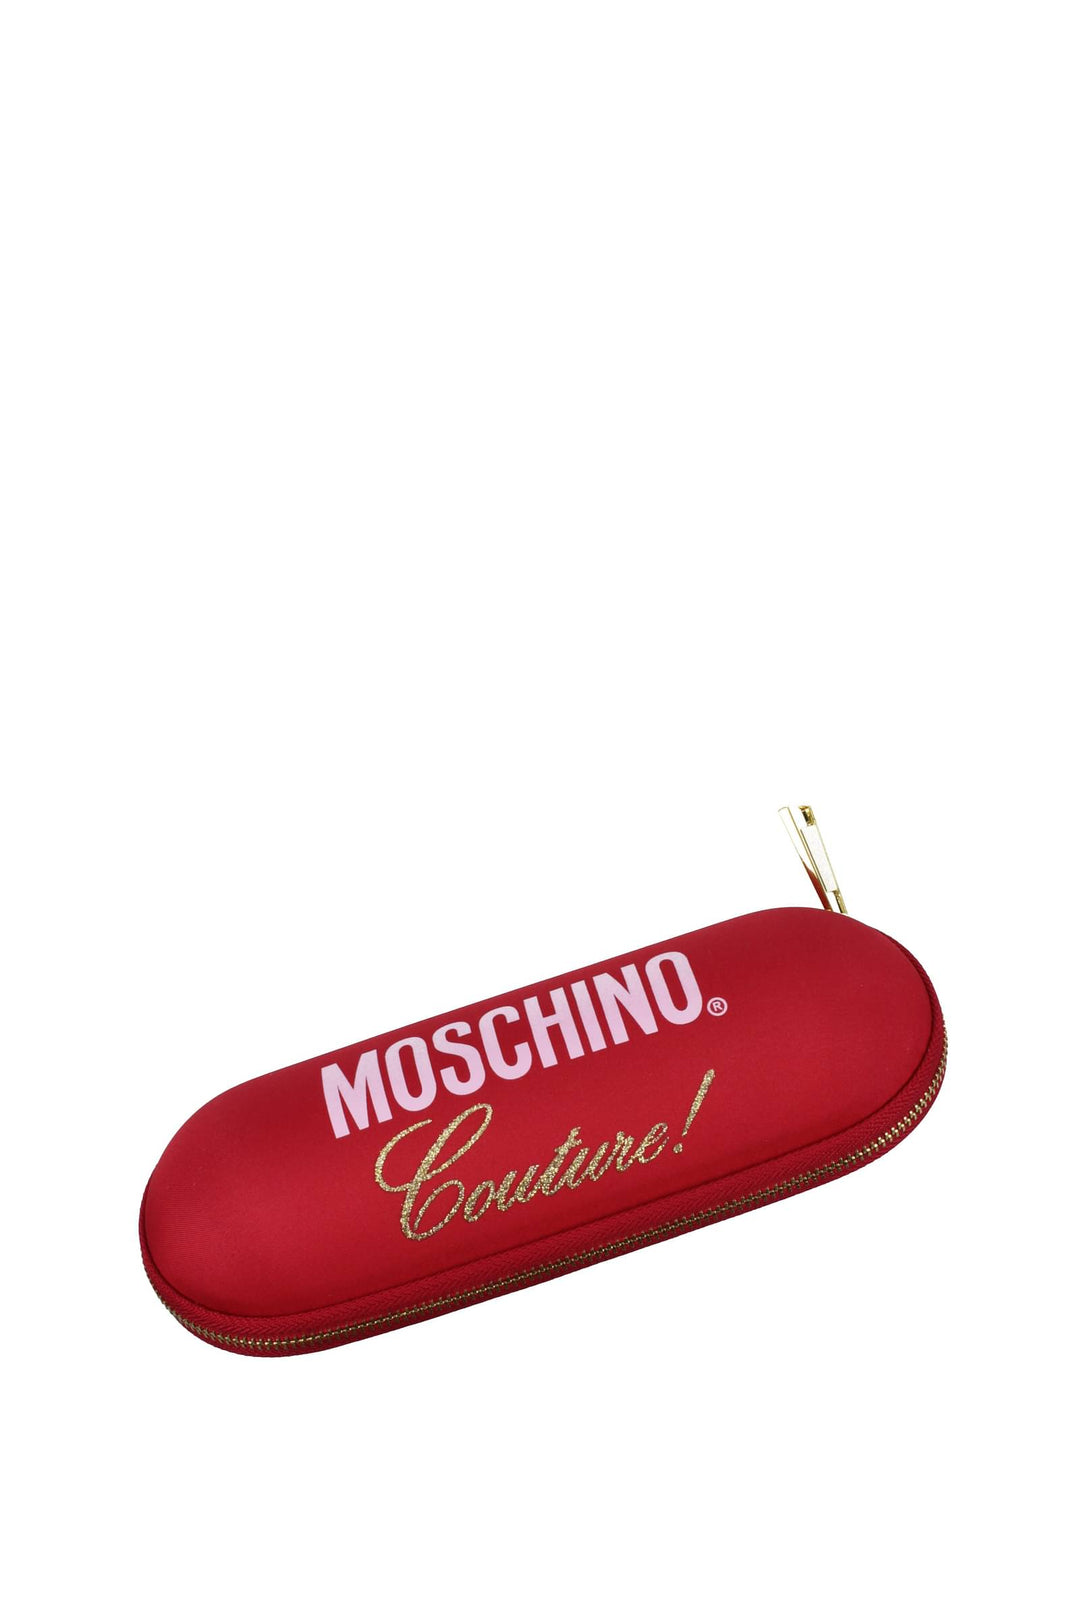 Ombrelli Couture Poliestere Rosso Bordeaux - Moschino - Donna